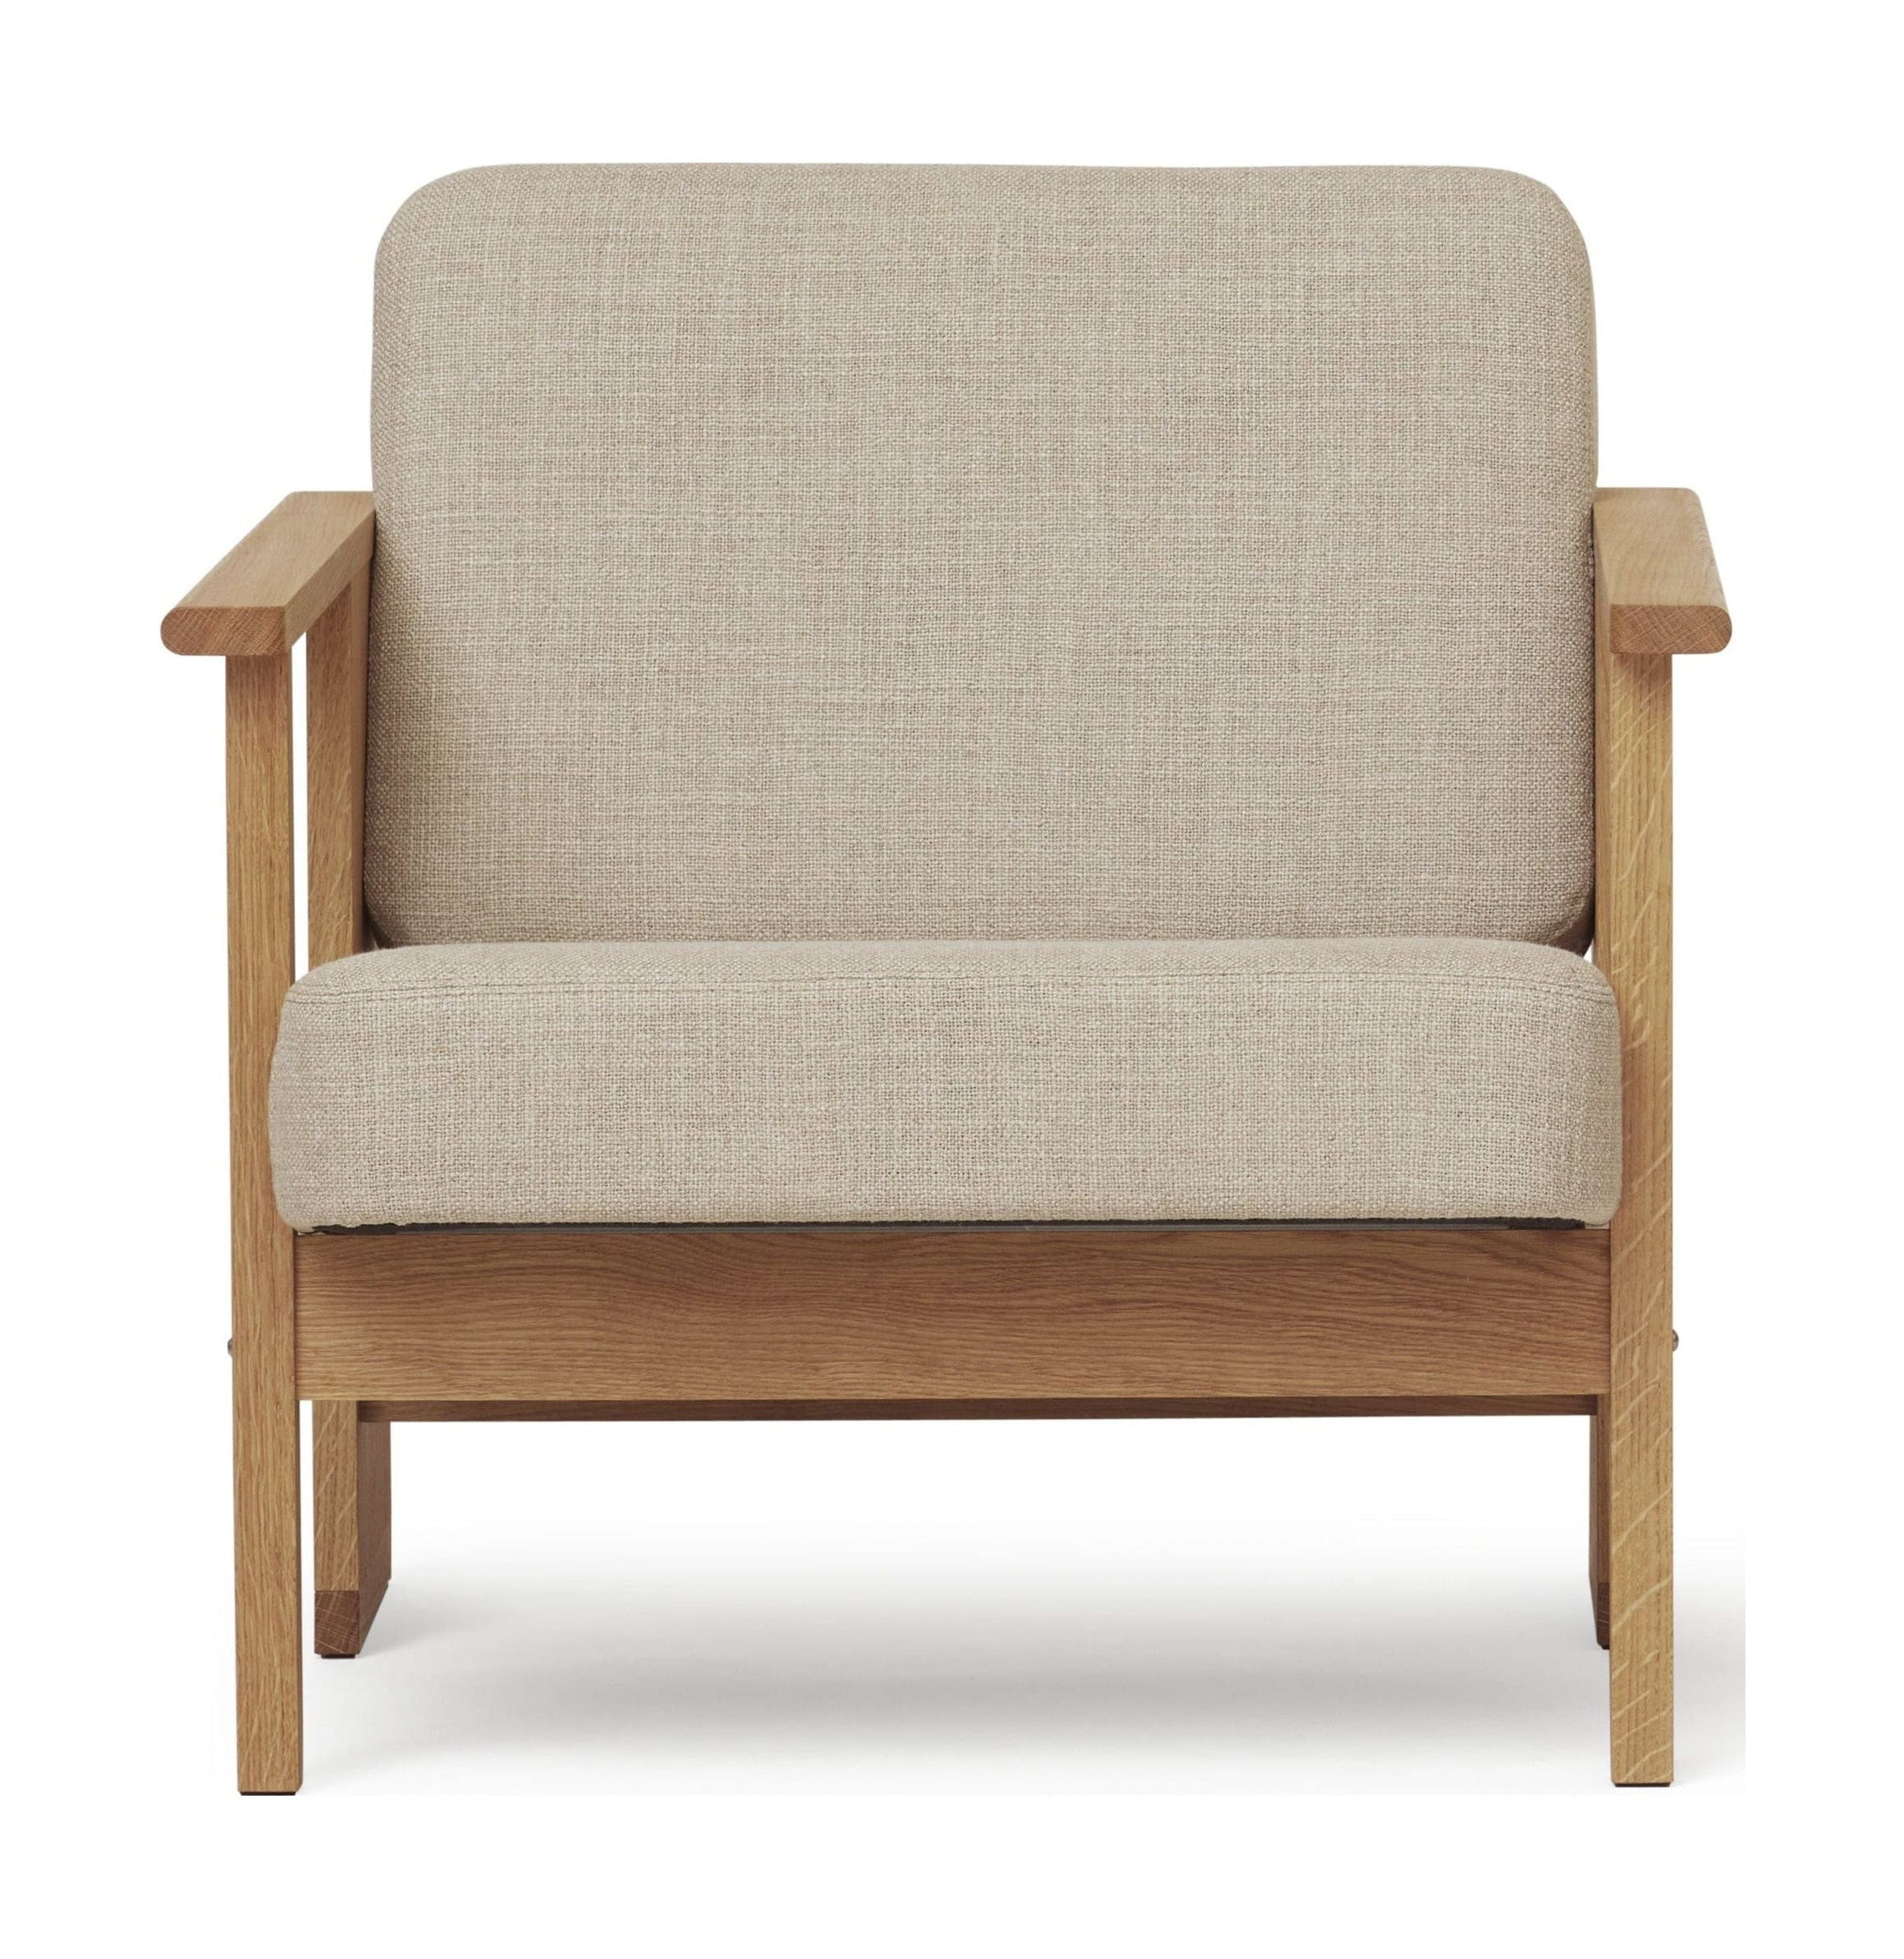 Form & Refine Block Lounge Chair. Oak